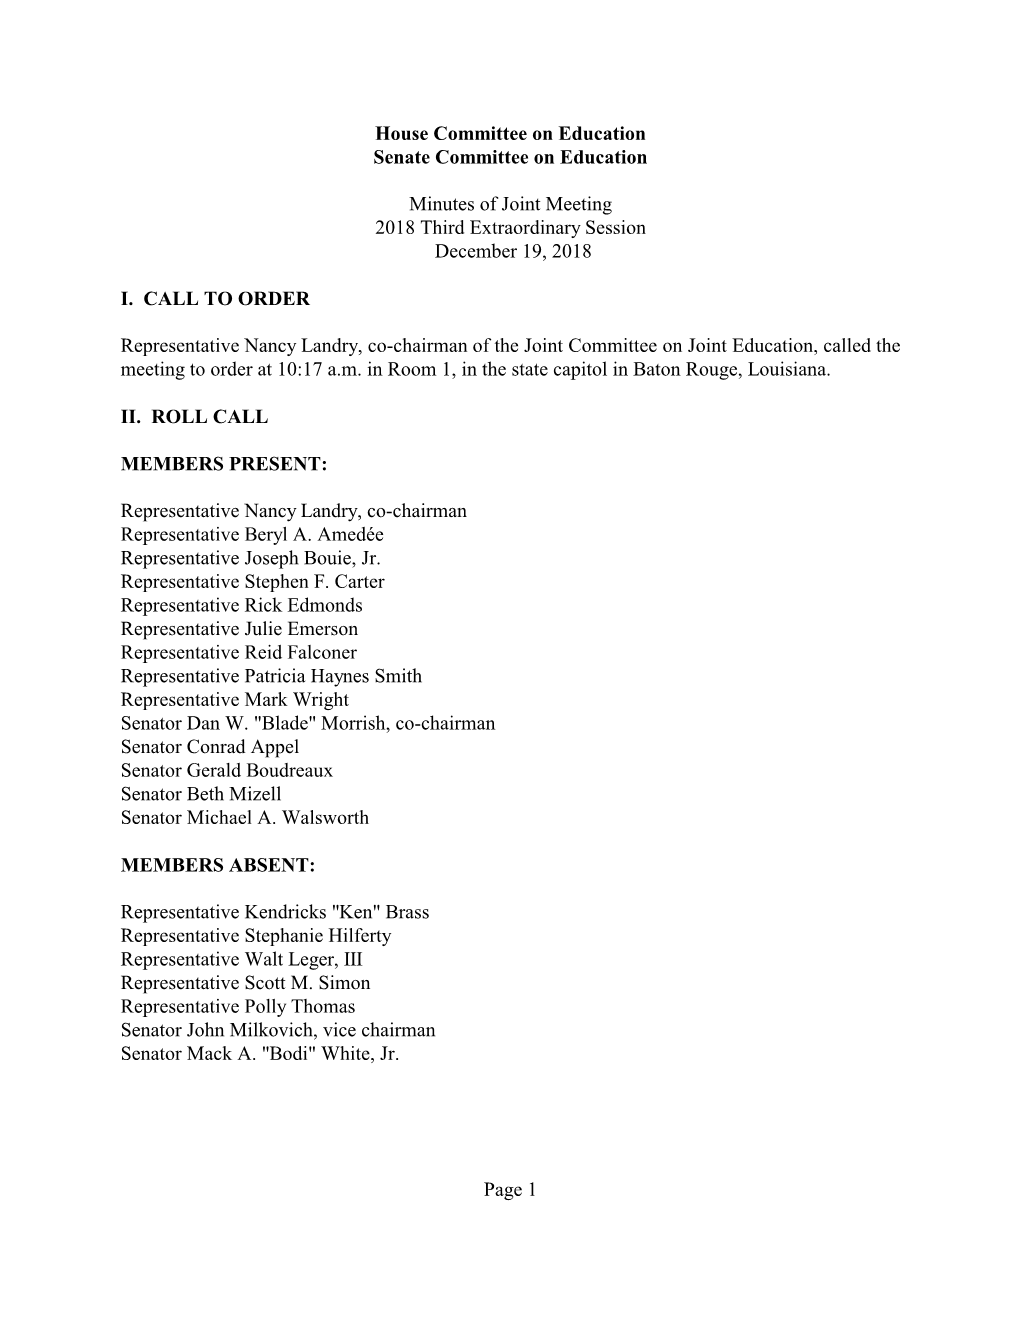 House Committee on Education Senate Committee on Education